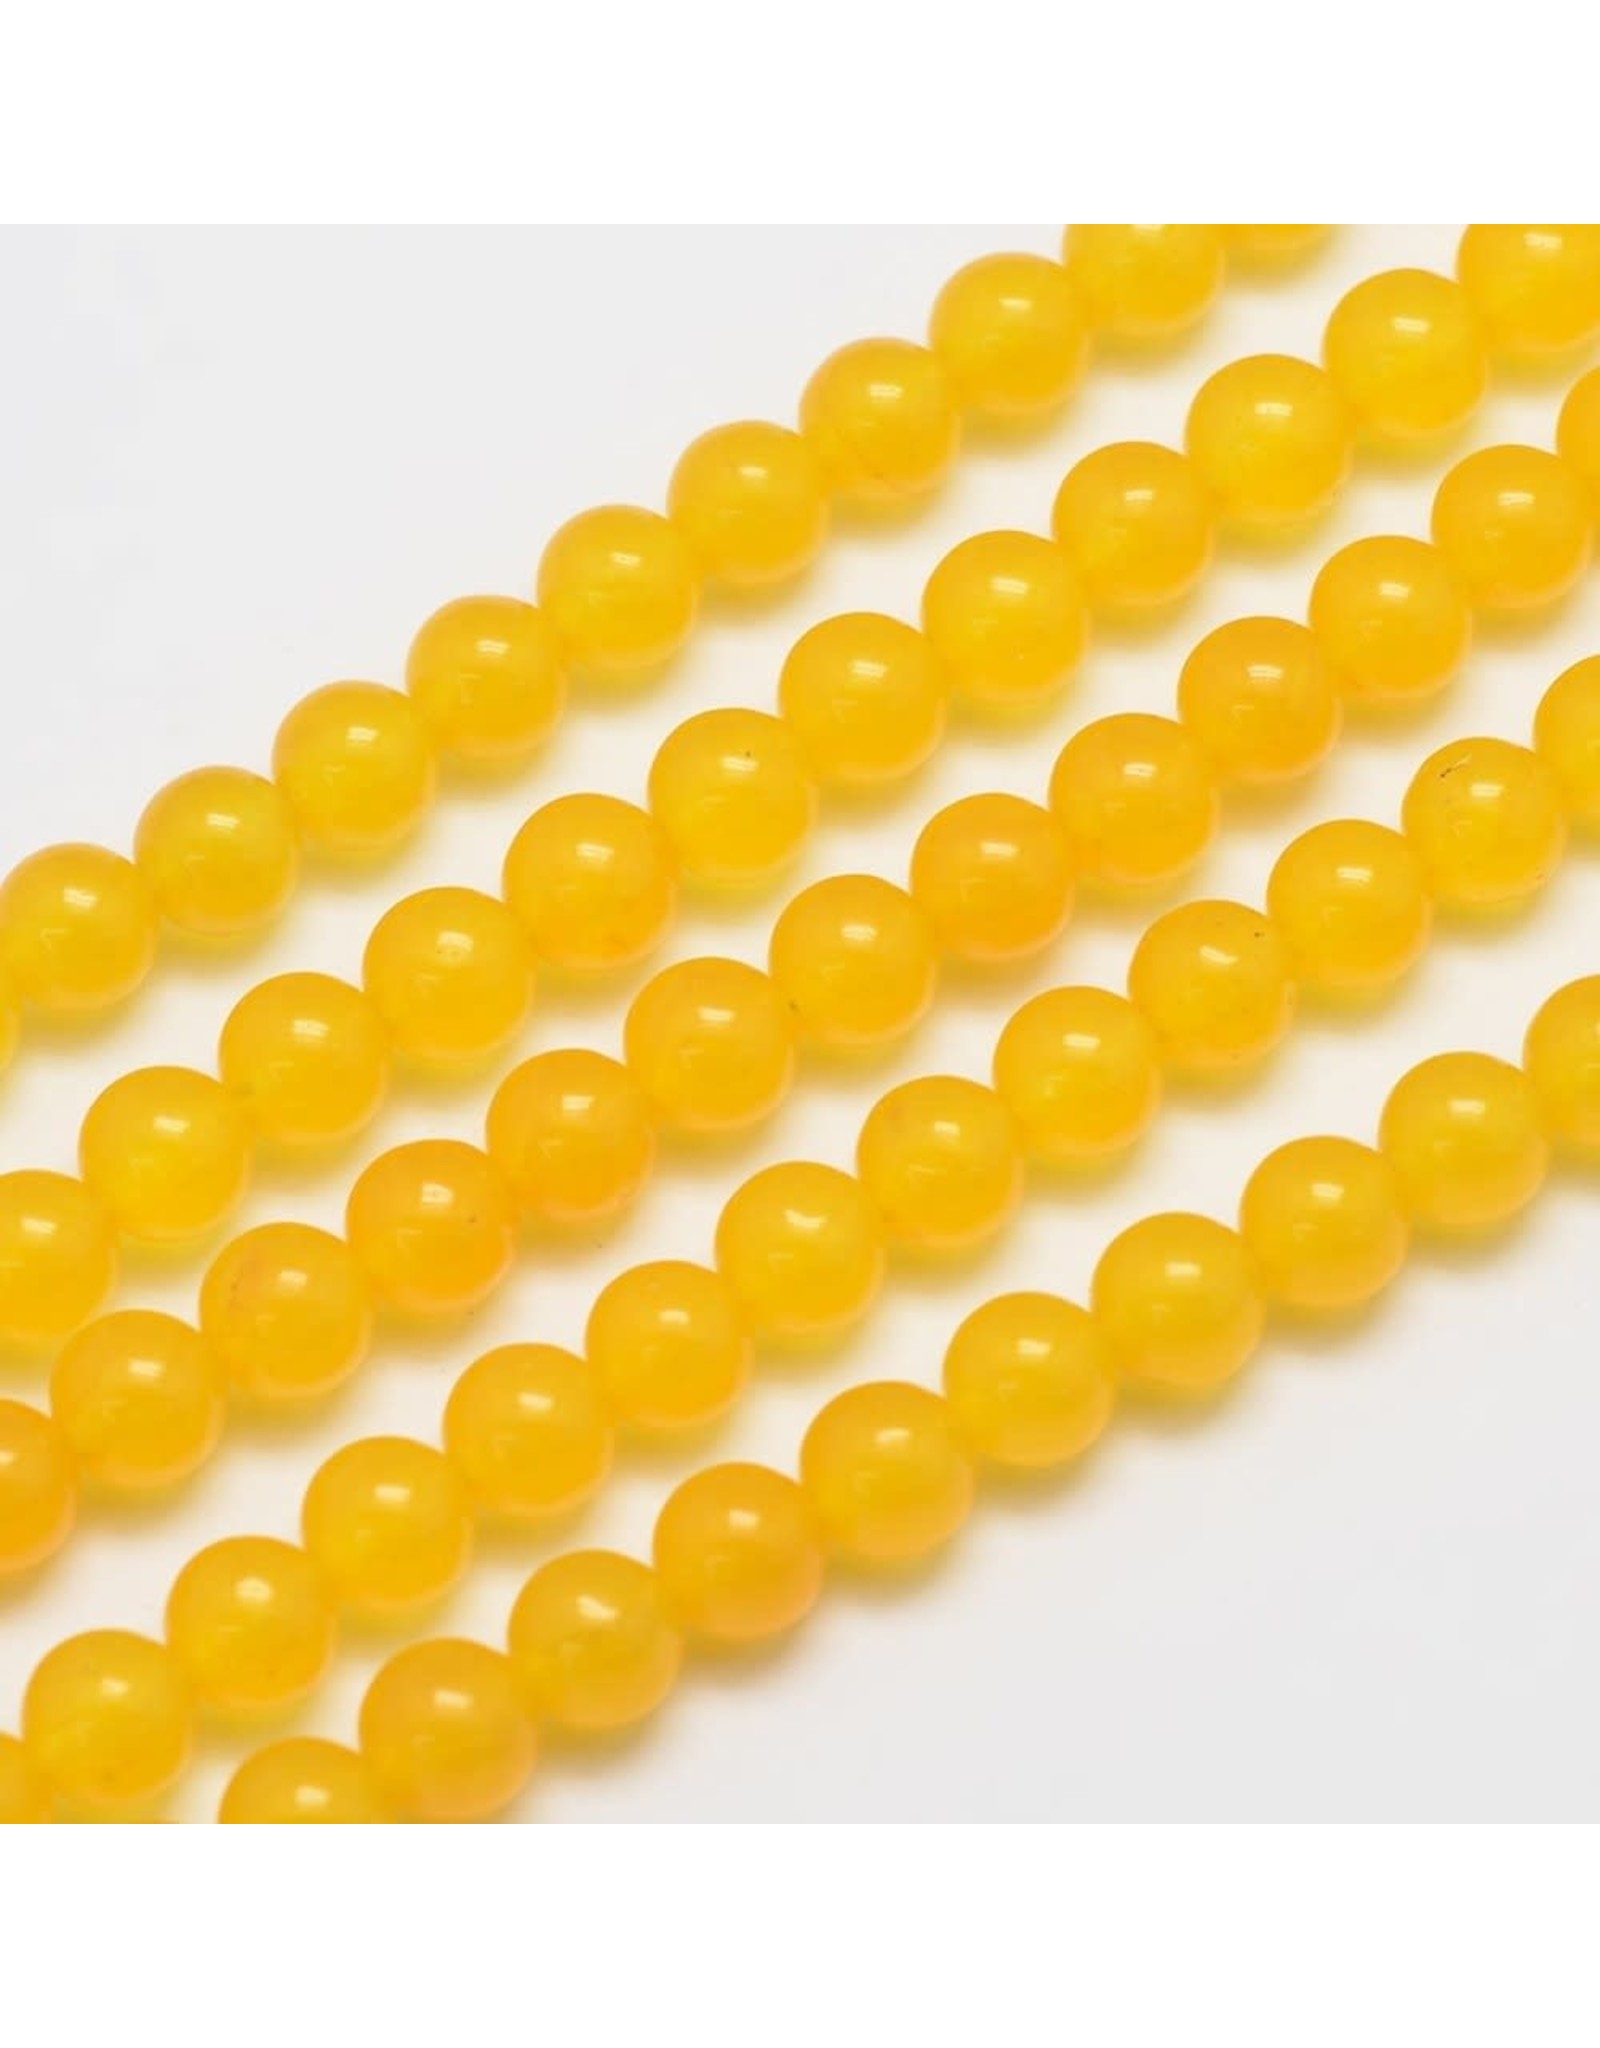 Malaysia  Jade Dyed 6mm Yellow  15" Strand  apprx 60 beads